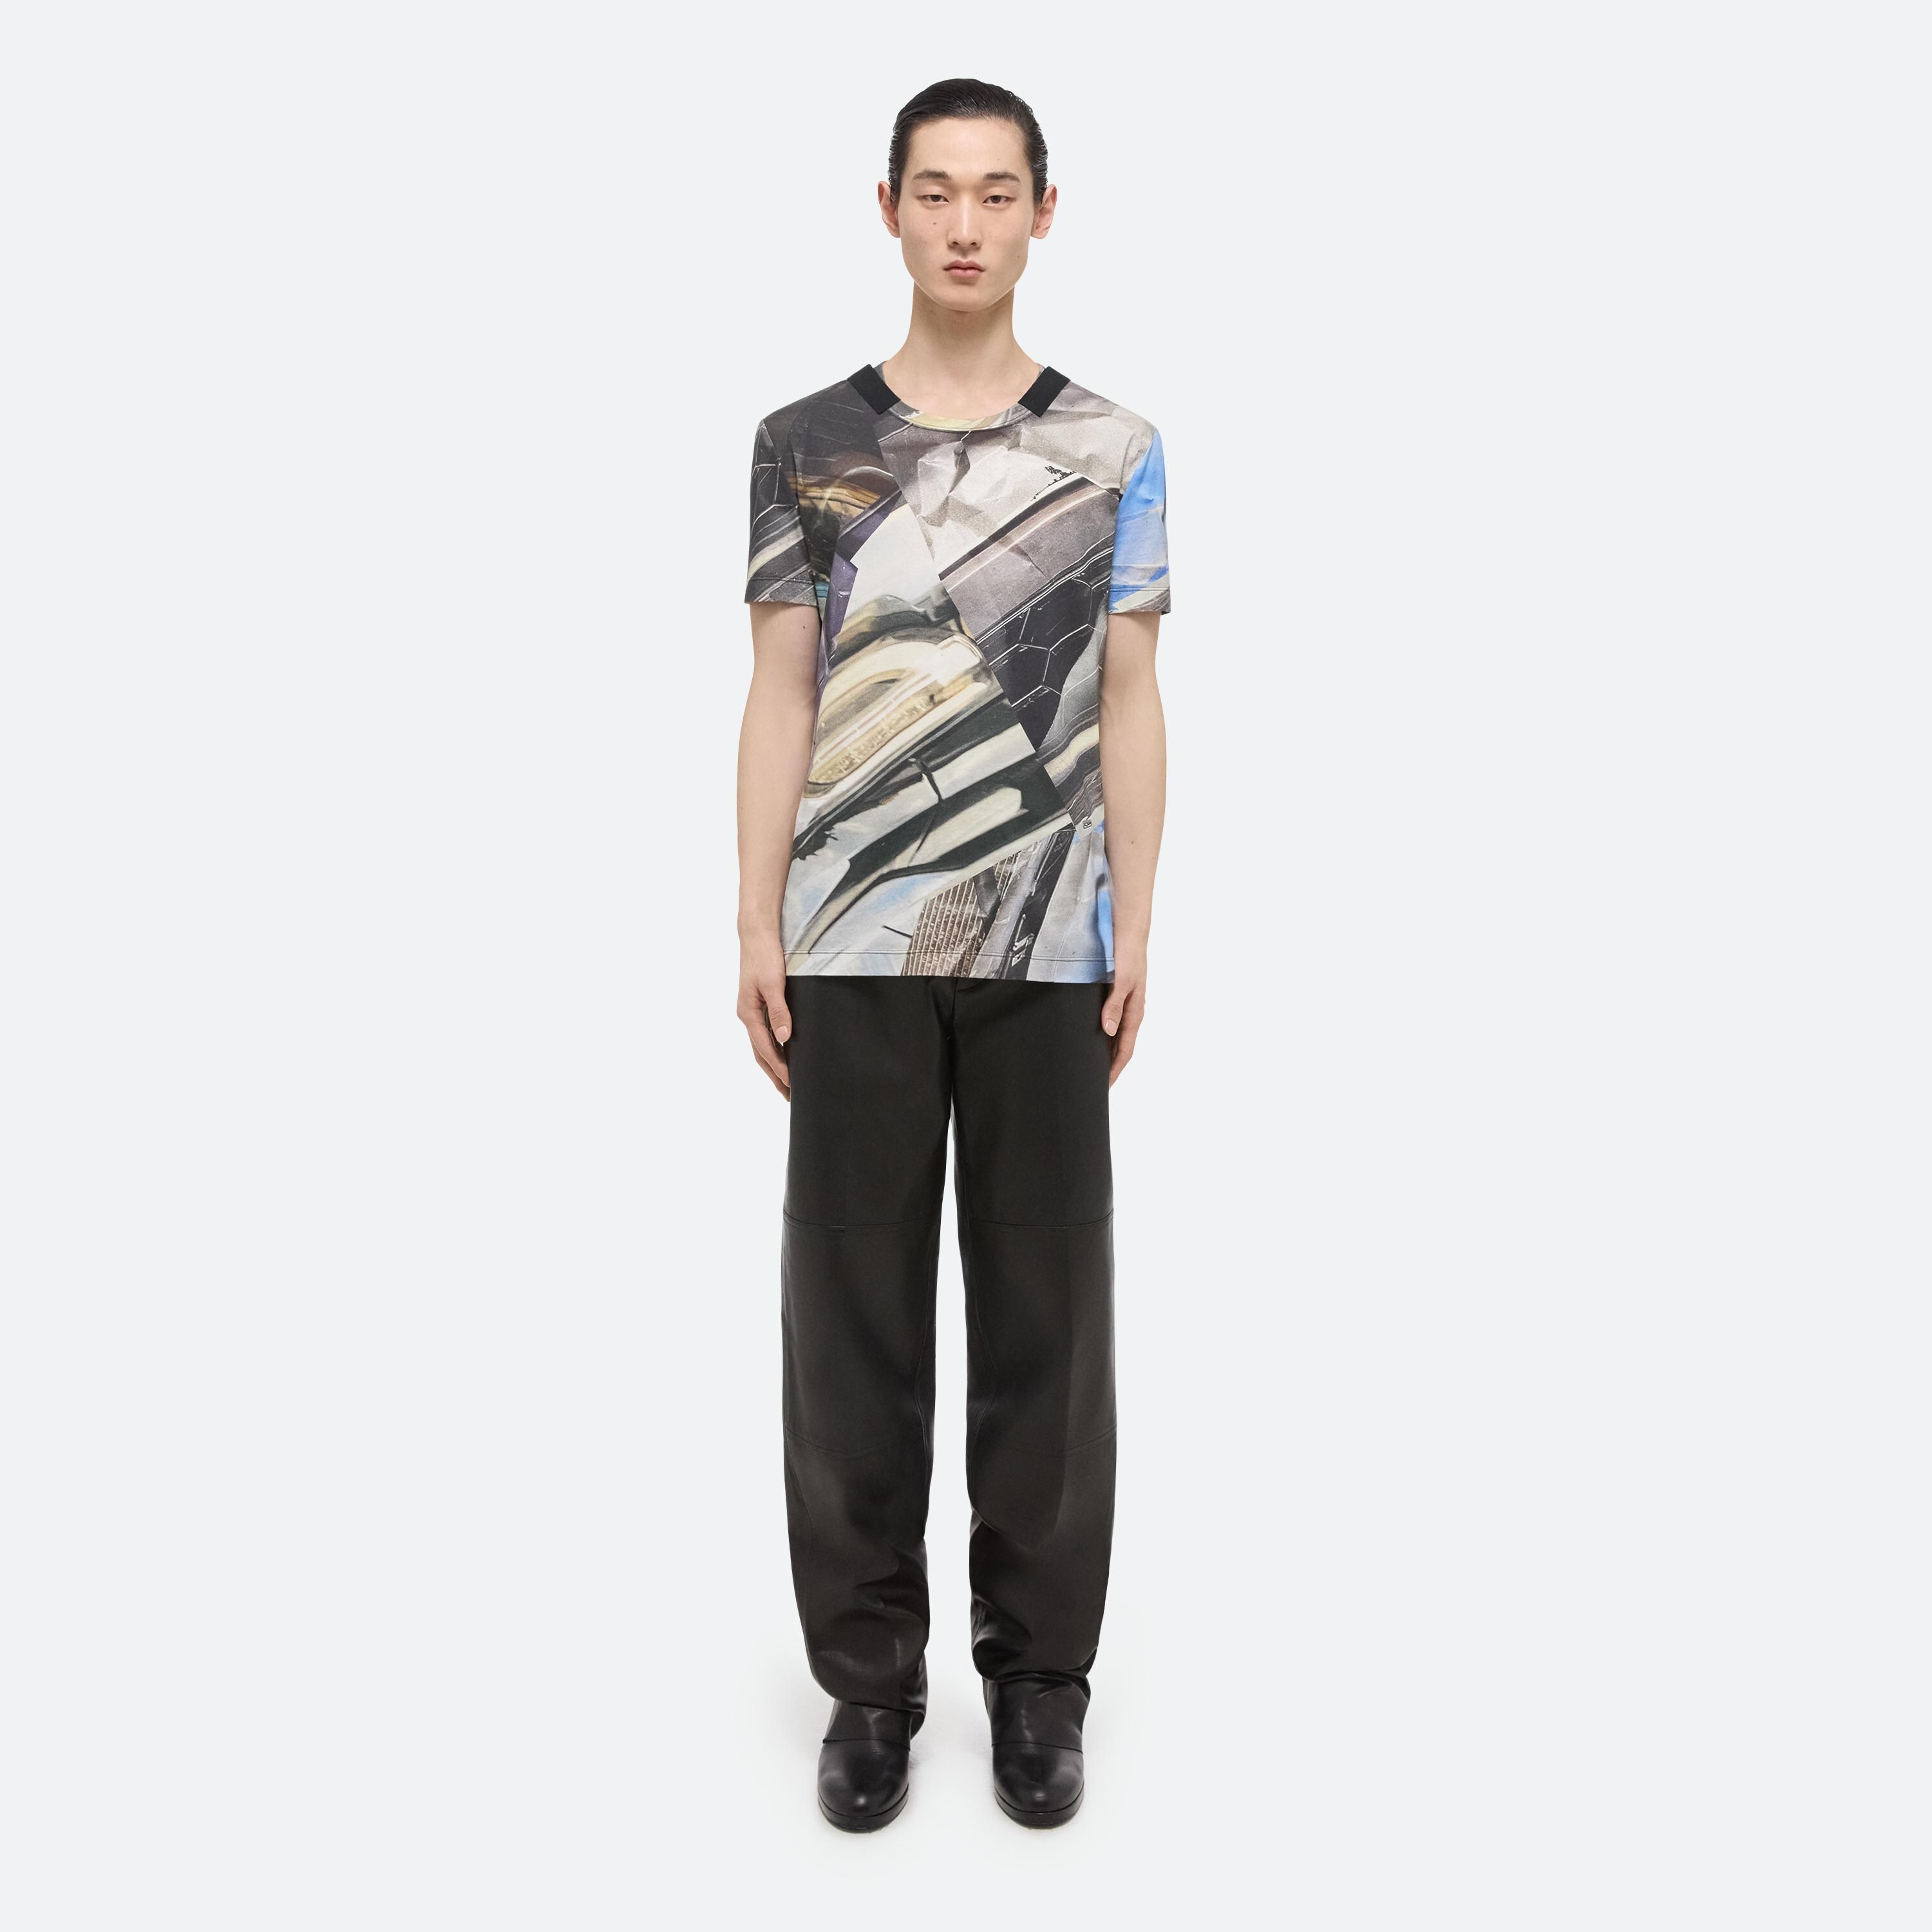 Helmut Lang Men's T-Shirts | HELMUTLANG.COM